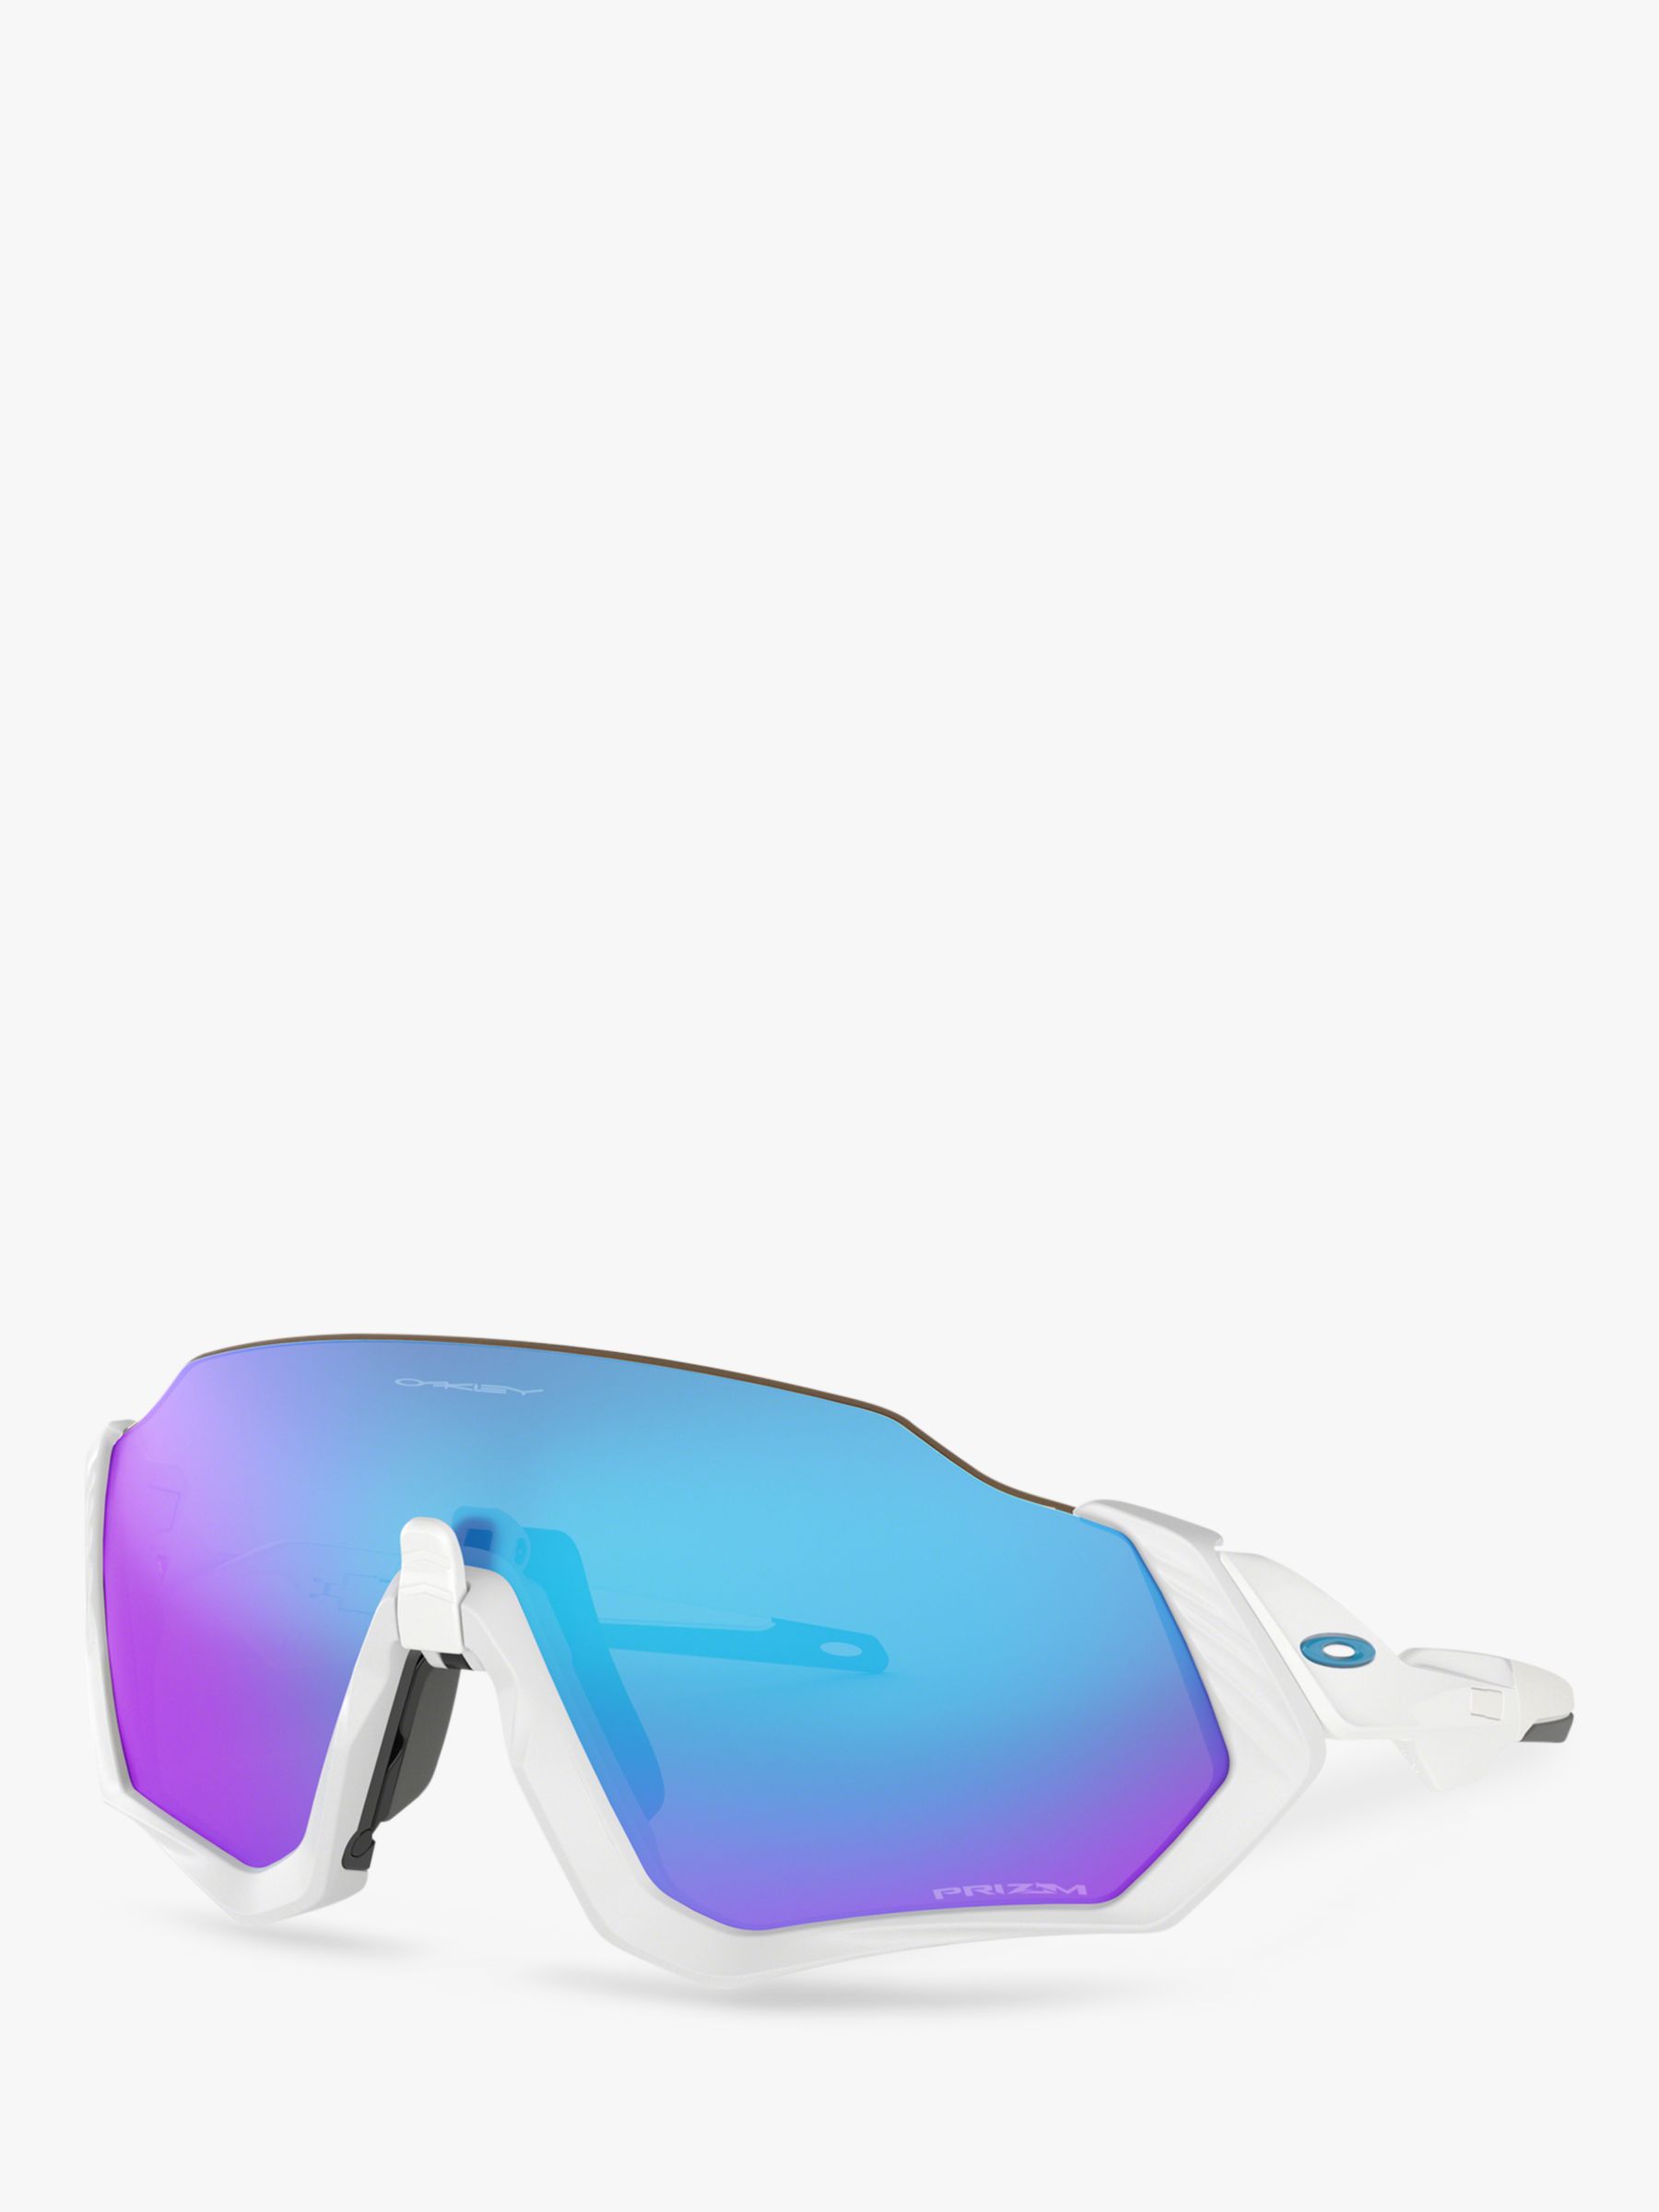 Oakley OO9401 Men's Flight Jacket Prizm Rectangular Sunglasses, White/Mirror Blue